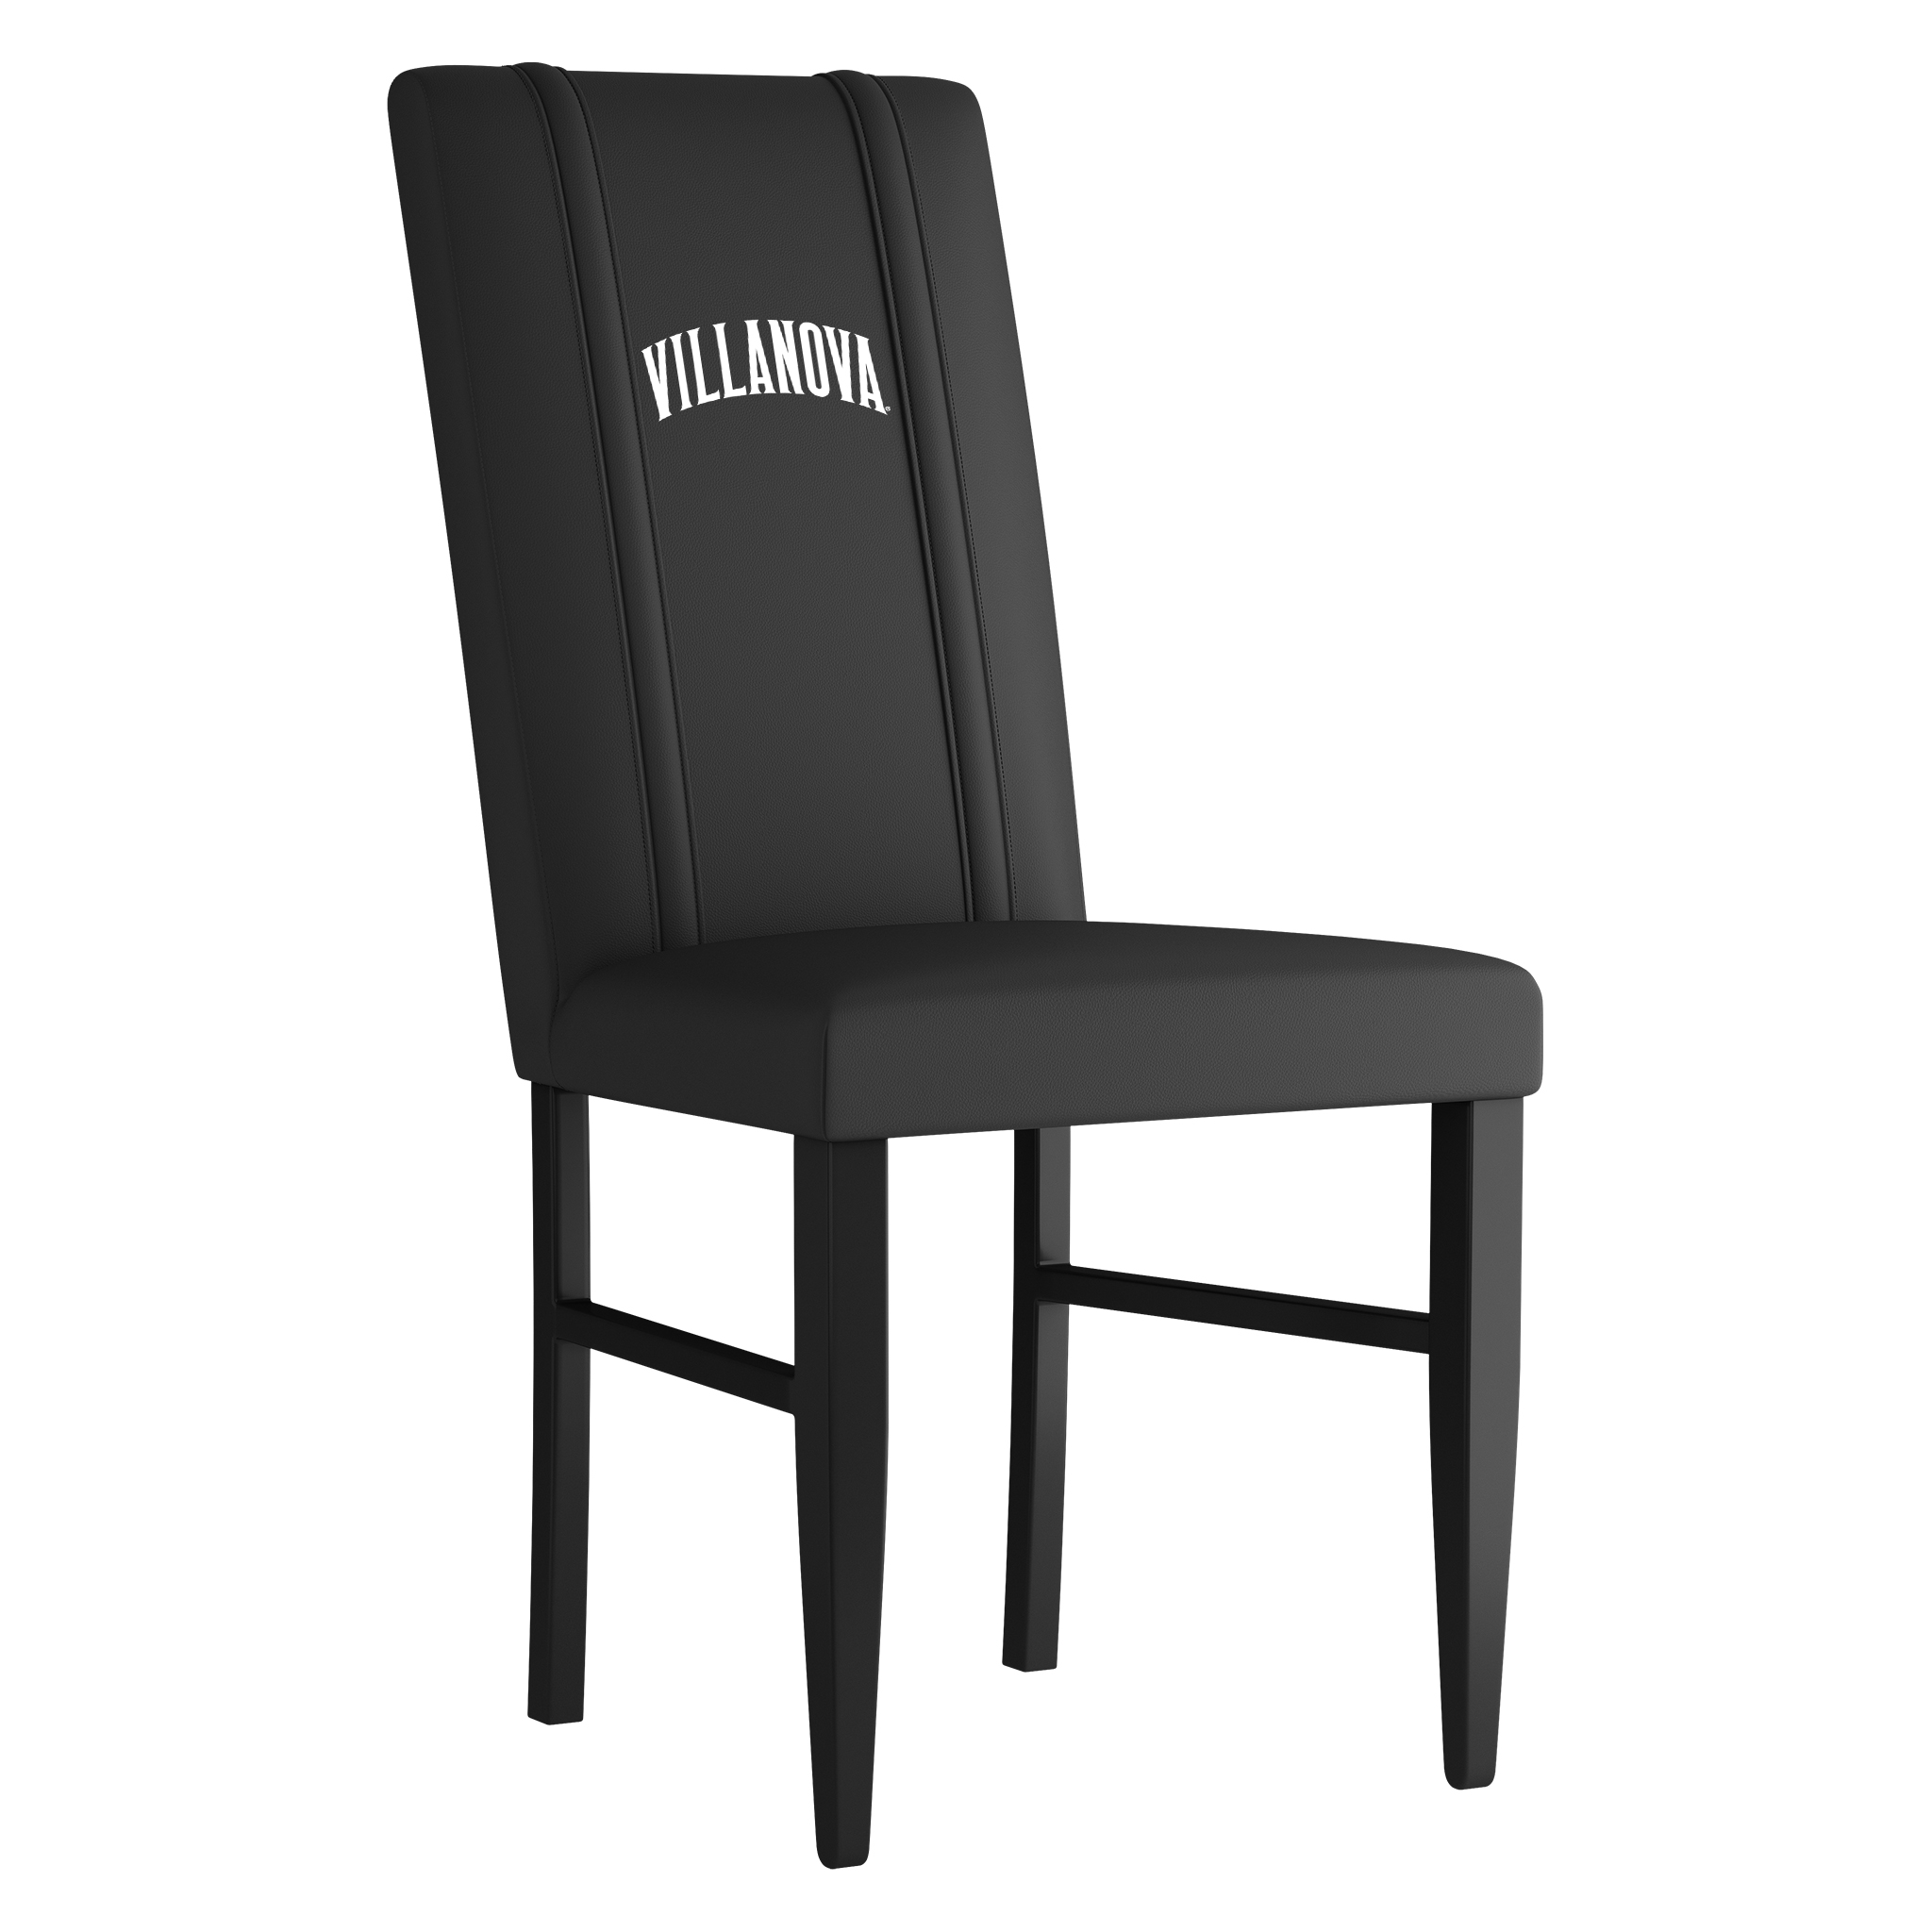 Villanova Side Chair 2000 With Villanova Wordmark Logo